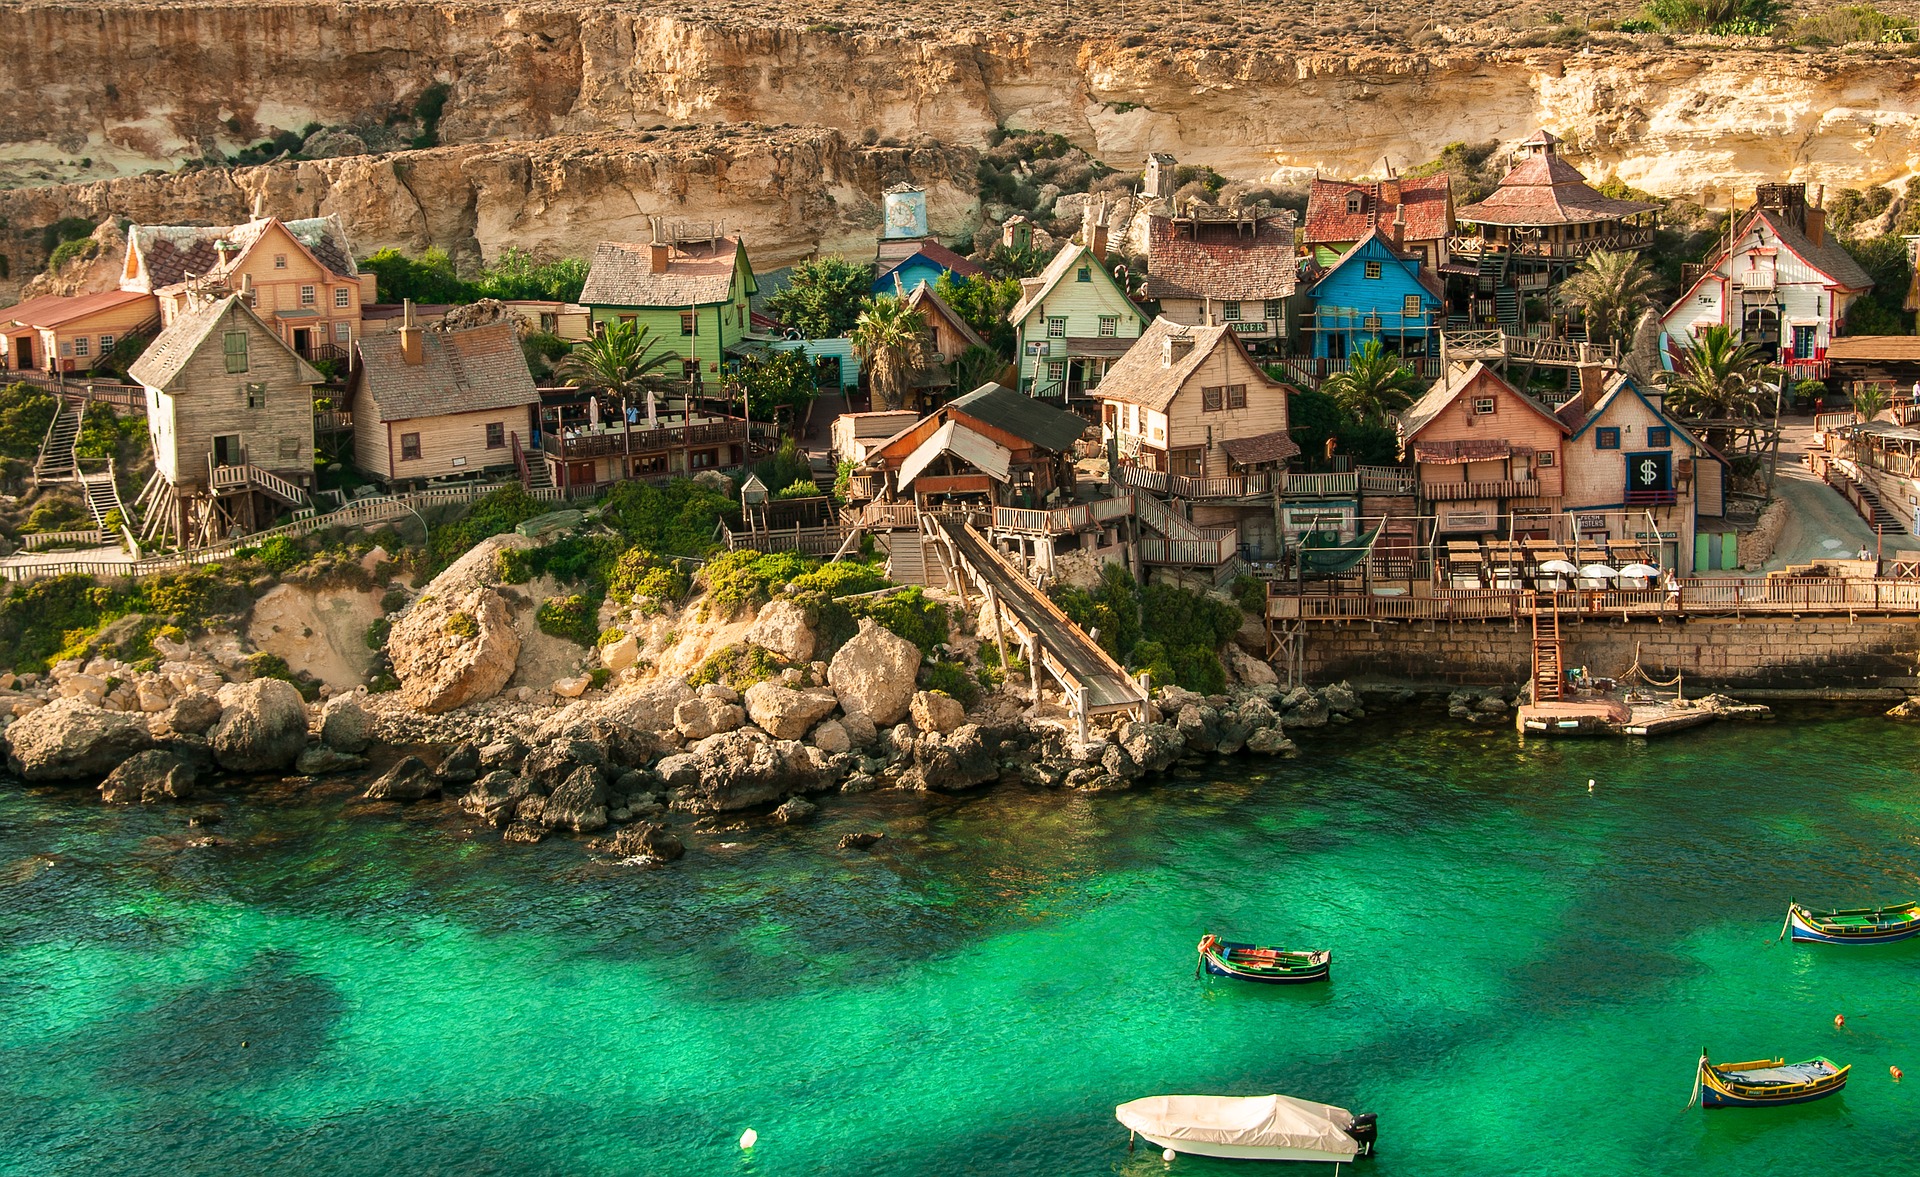 The beautiful popeye village in Malta